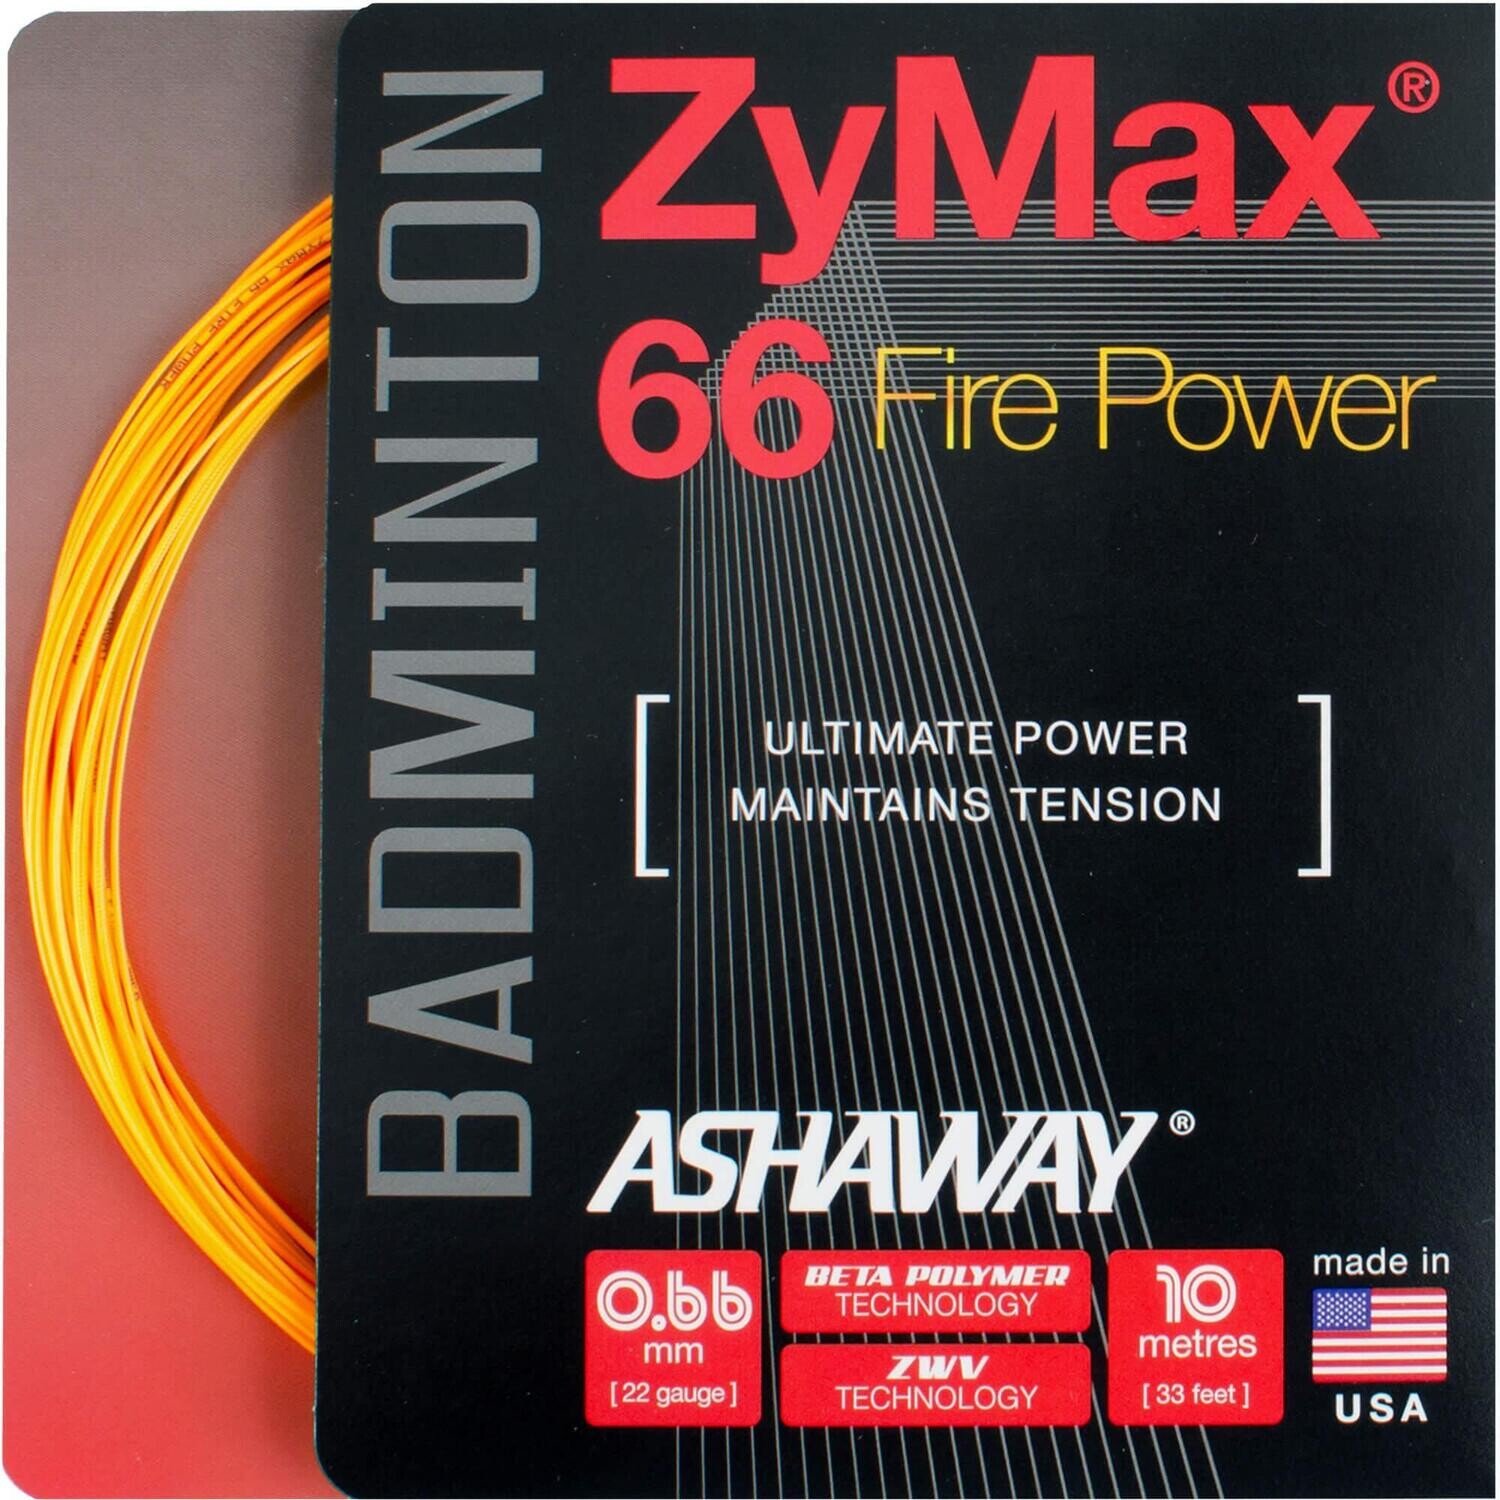 Ashaway Zymax 66 Fire Power Badminton String Set - Orange